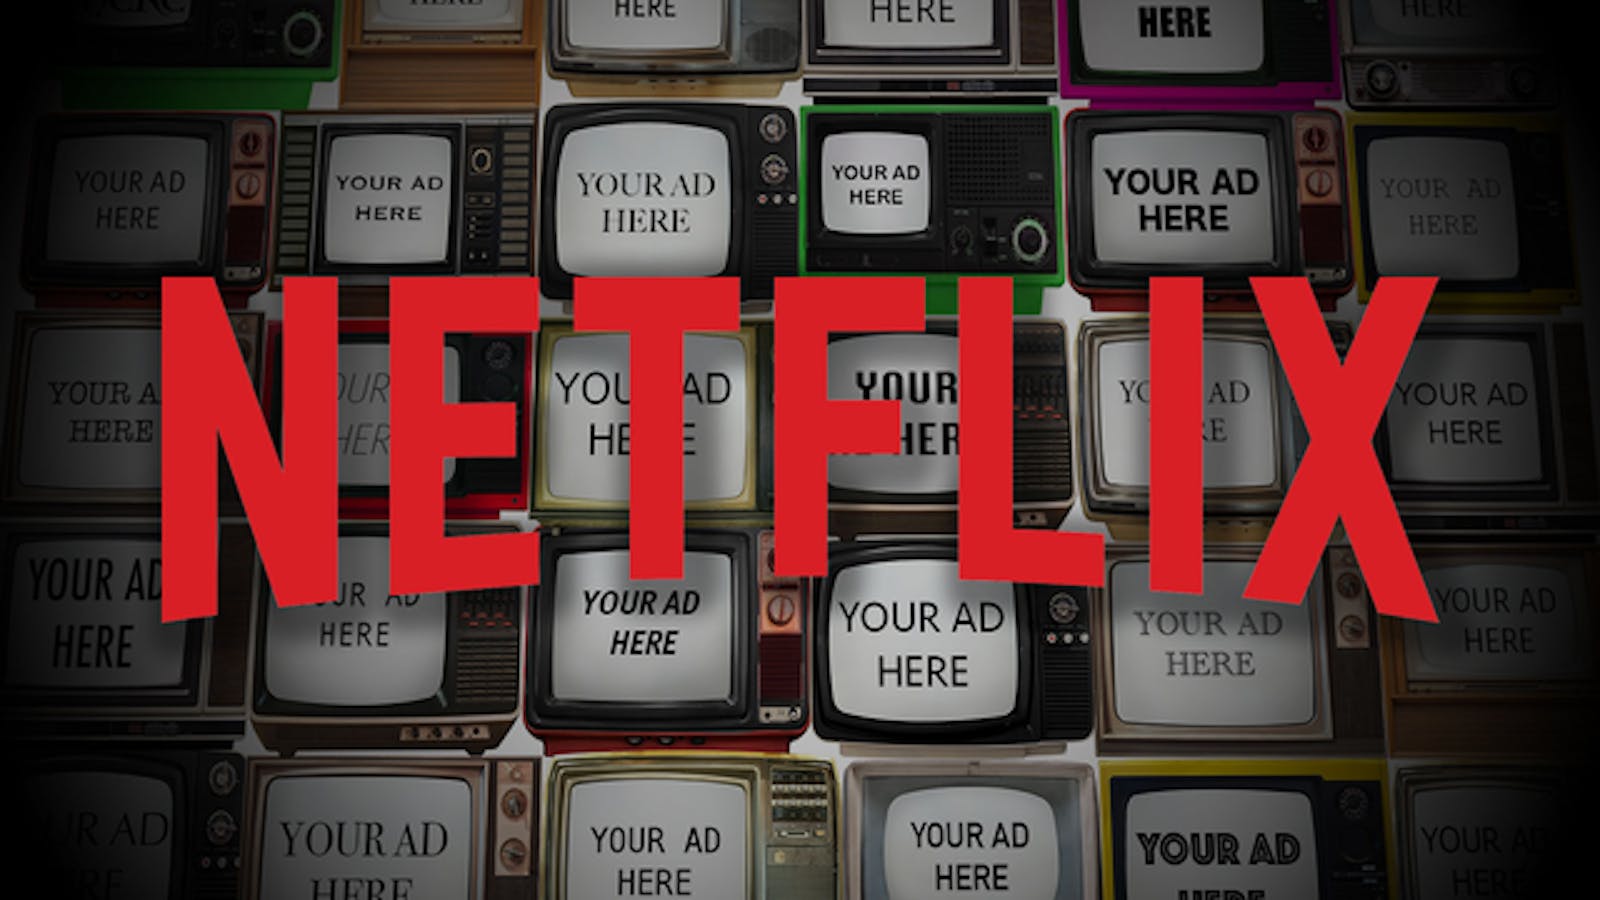 Survey: 39% of U.S. Consumers Say Netflix Has Best Original Content